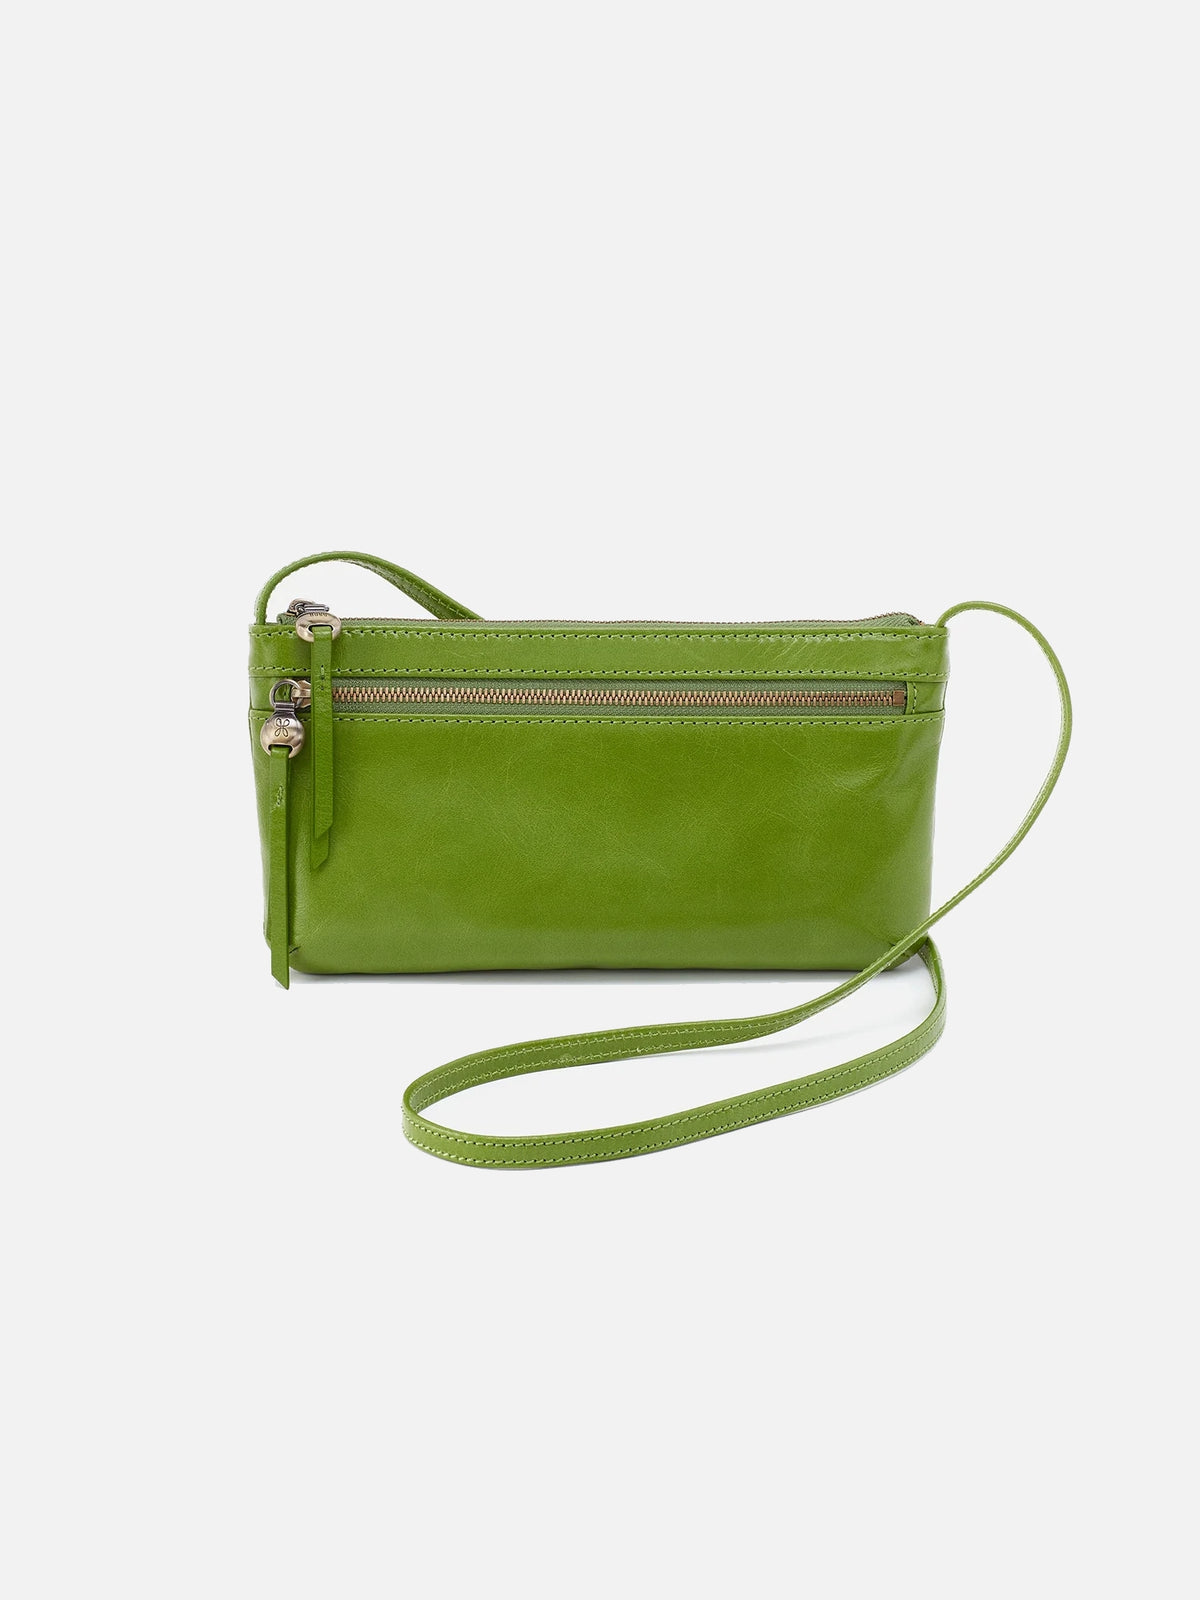 hobo cara crossbody bag in garden green polished leather